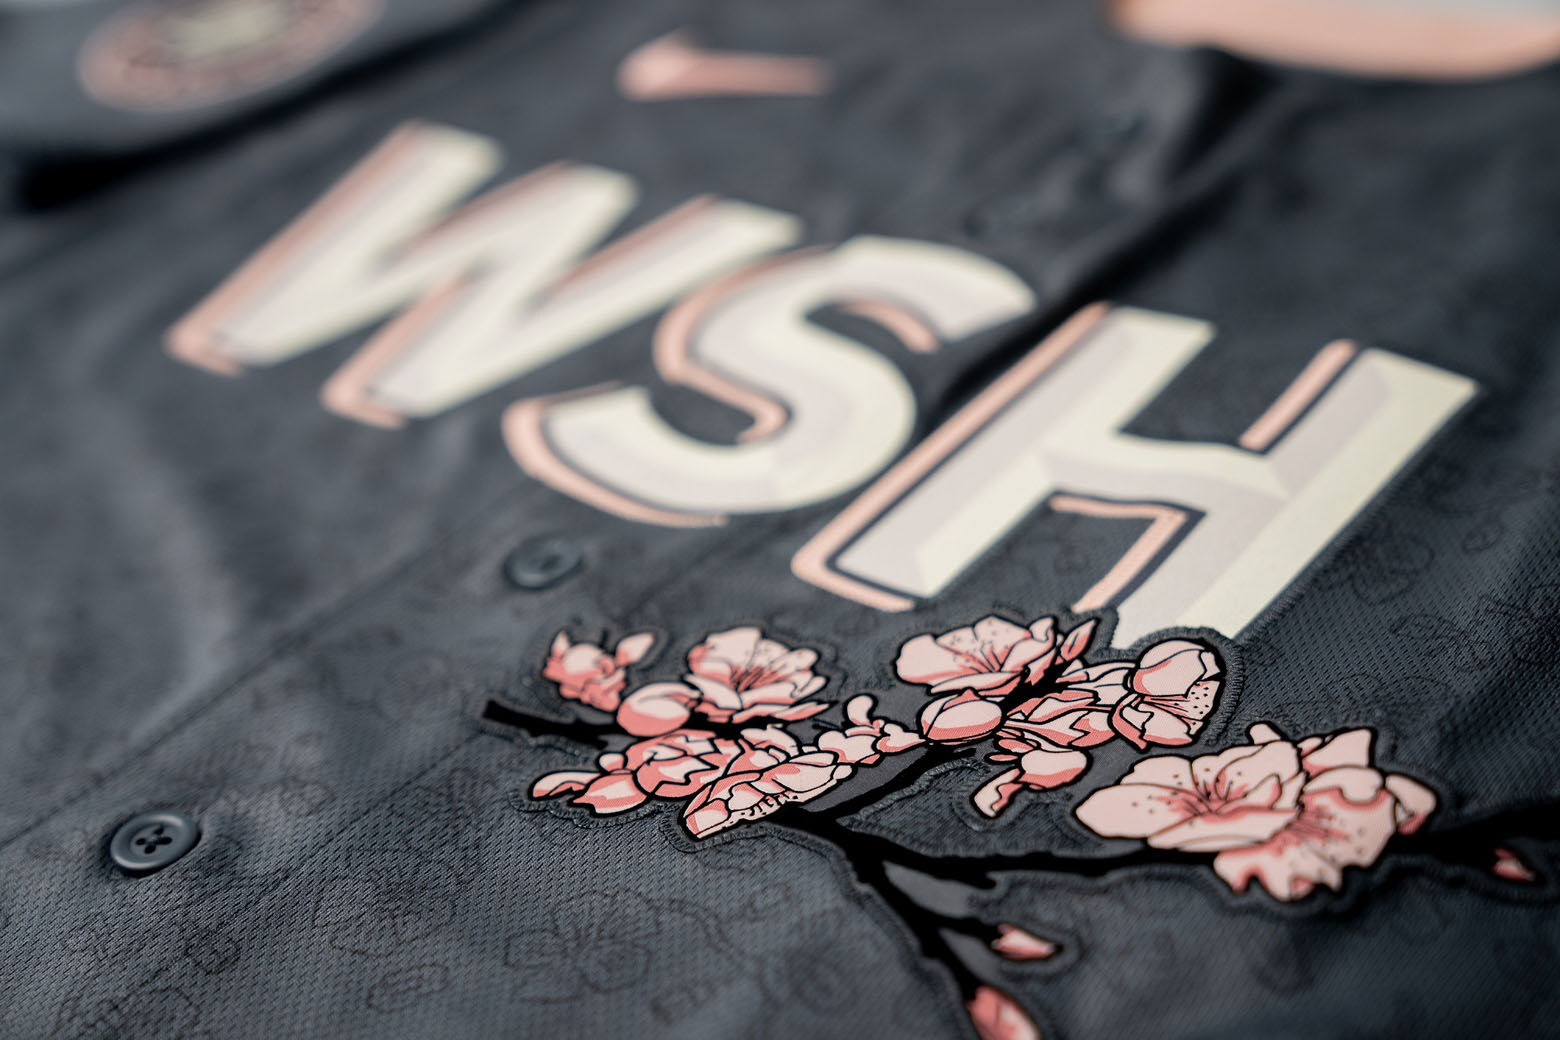 washington nationals cherry blossom shirts